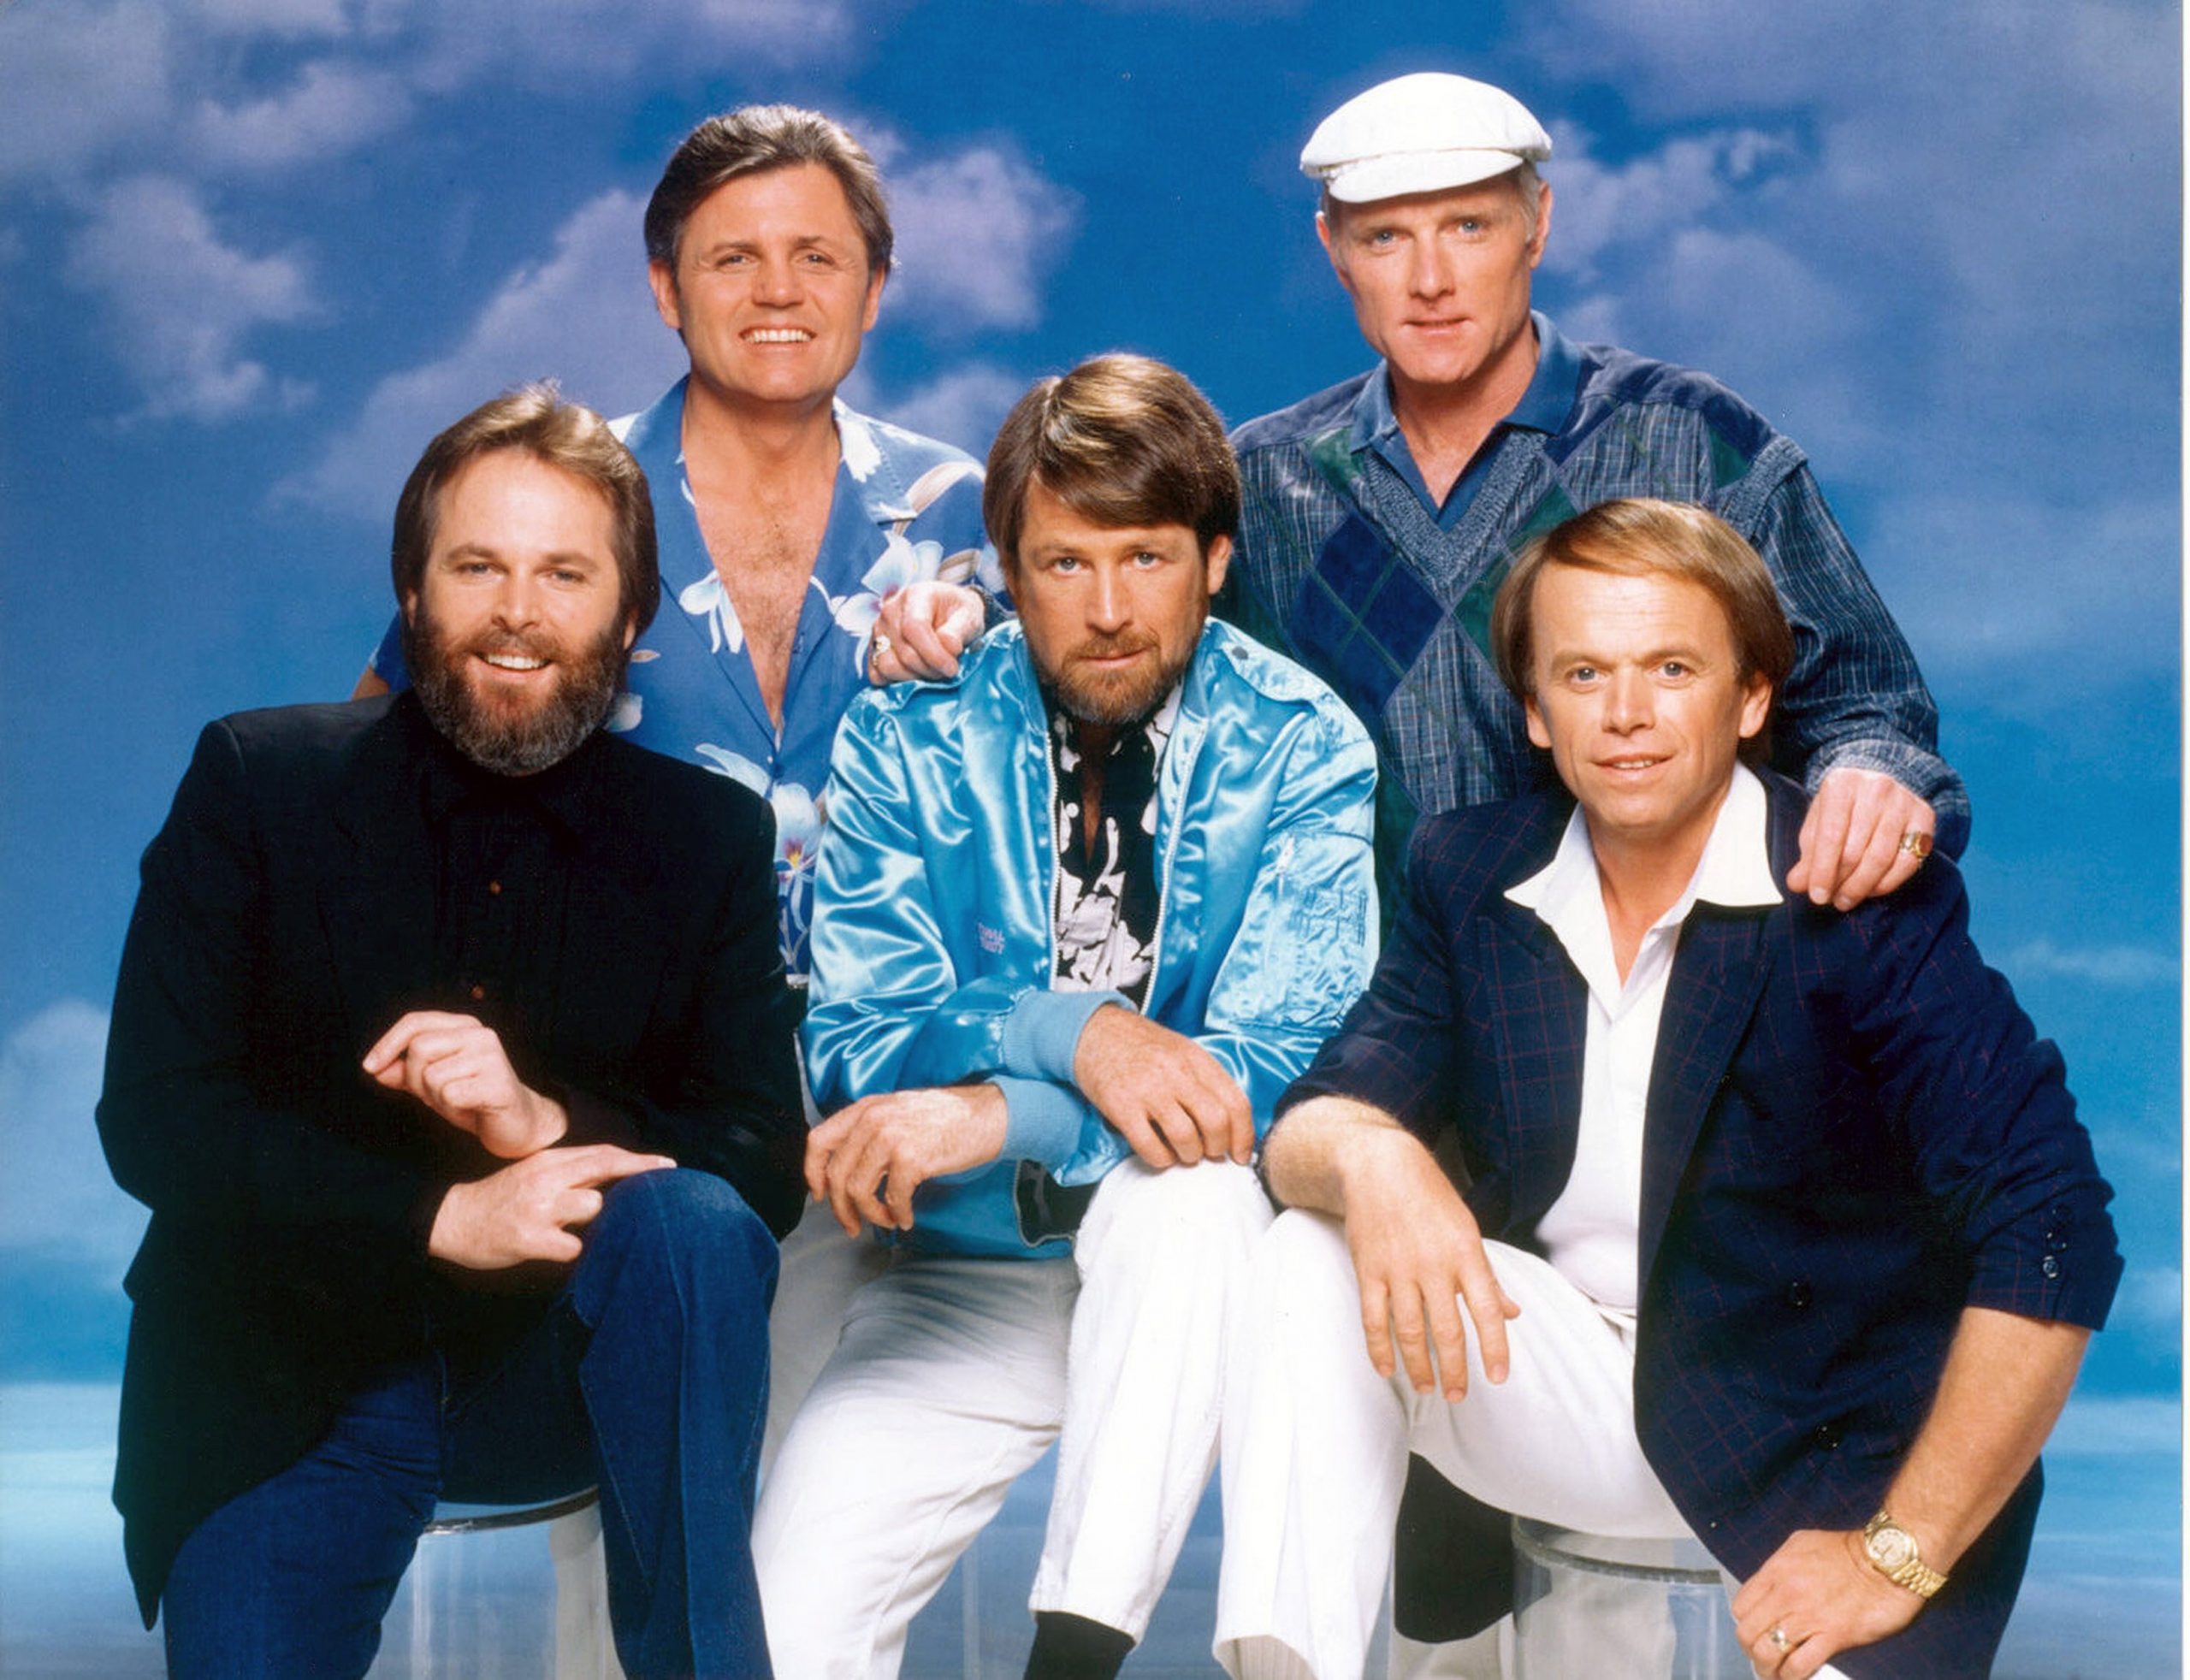 The Beach Boys (L-R Carl Wilson, Bruce Johnston, Brian Wilson, Mike Love and Al Jardine) Pose for a portrait session